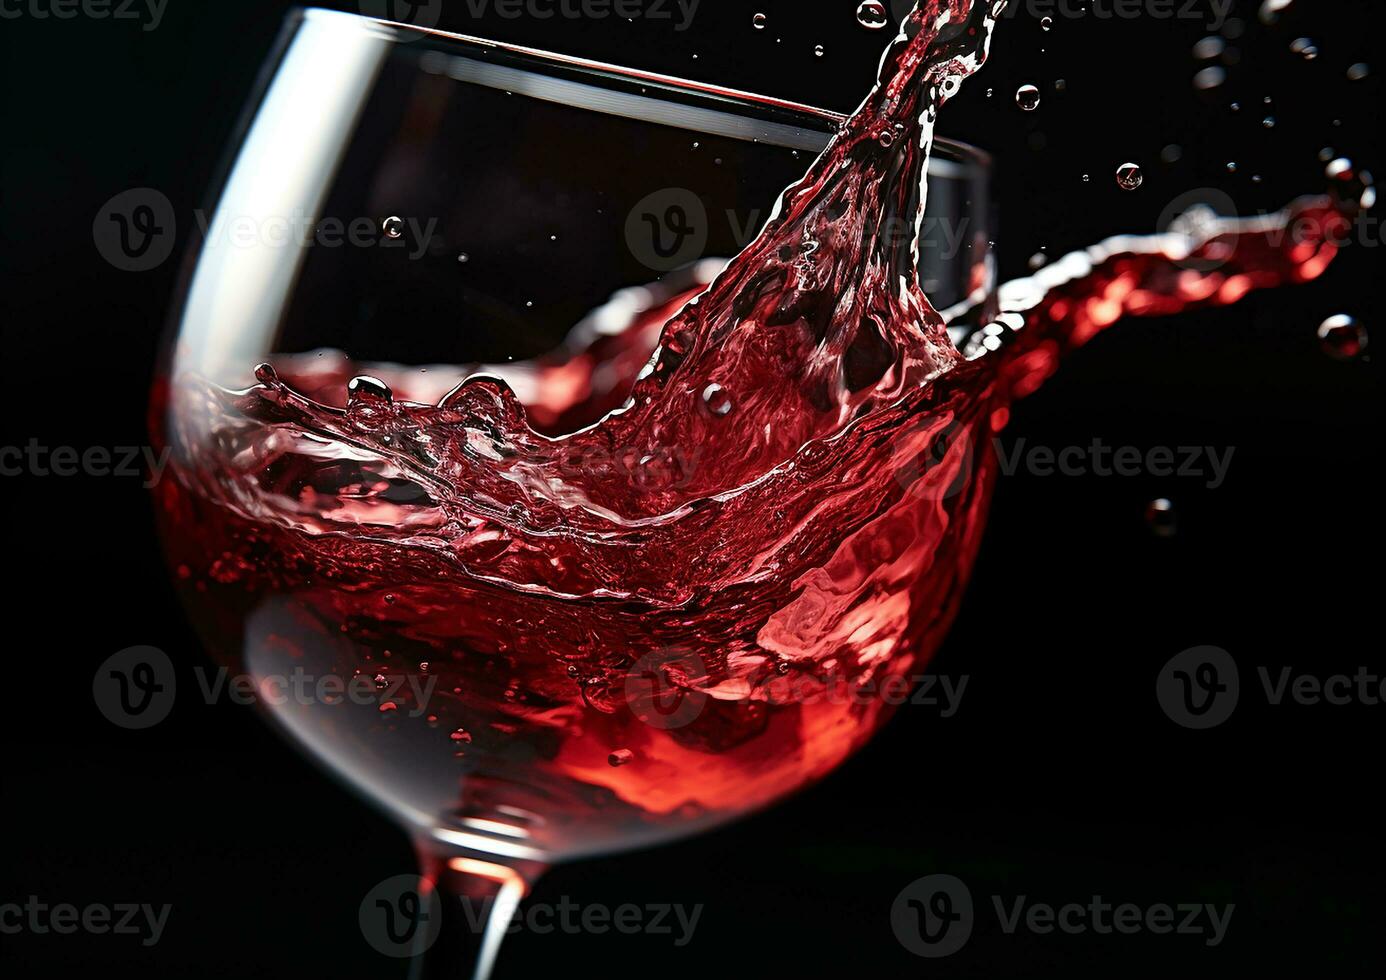 AI generated Splashing wine fills glass, creating a celebration generated by AI photo